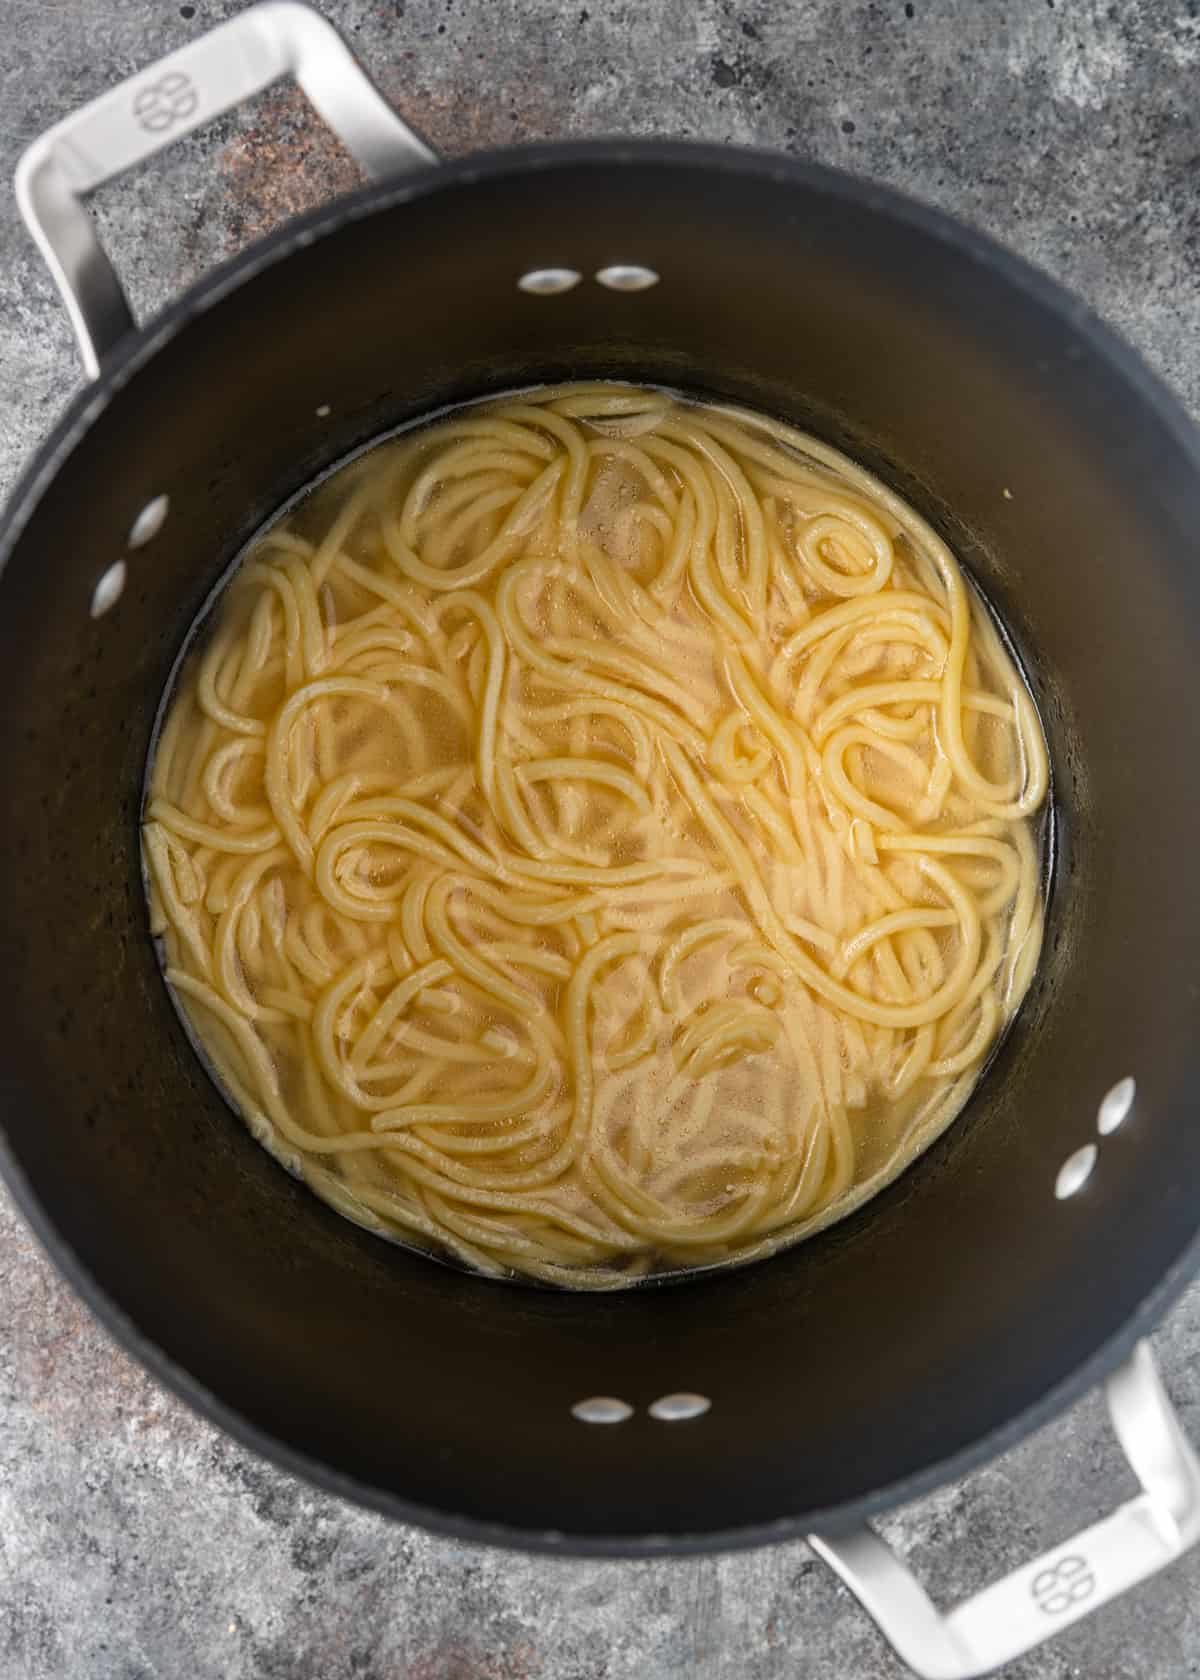 cooking lo mein noodles